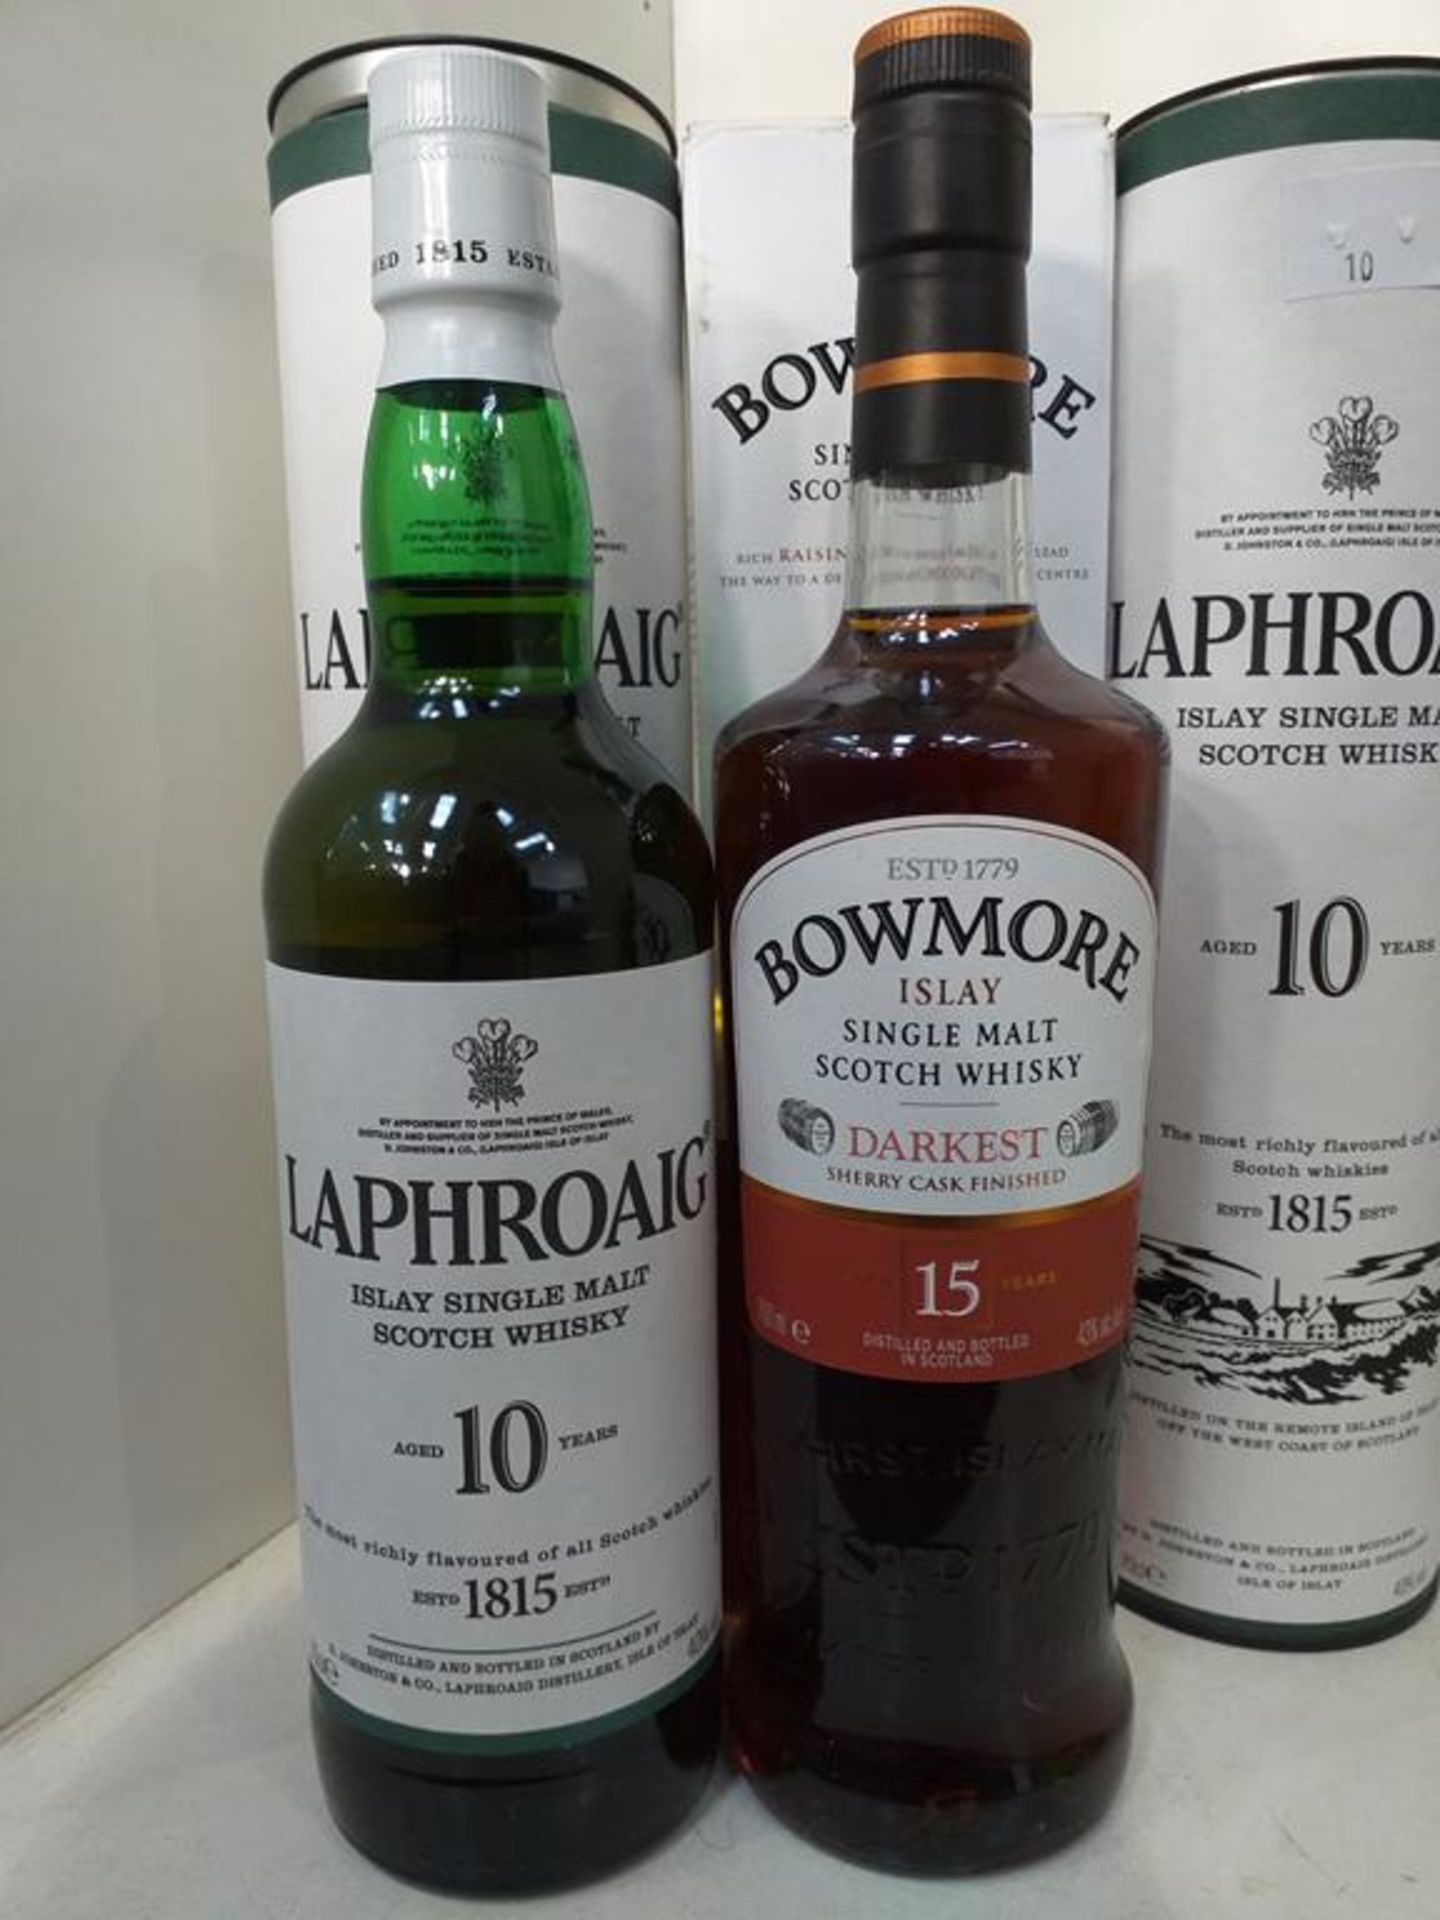 Two bottles of Laphroaig Islay Single Malt Scotch Whisky and a bottle of Bowmore Islay Single Malt - Image 2 of 4